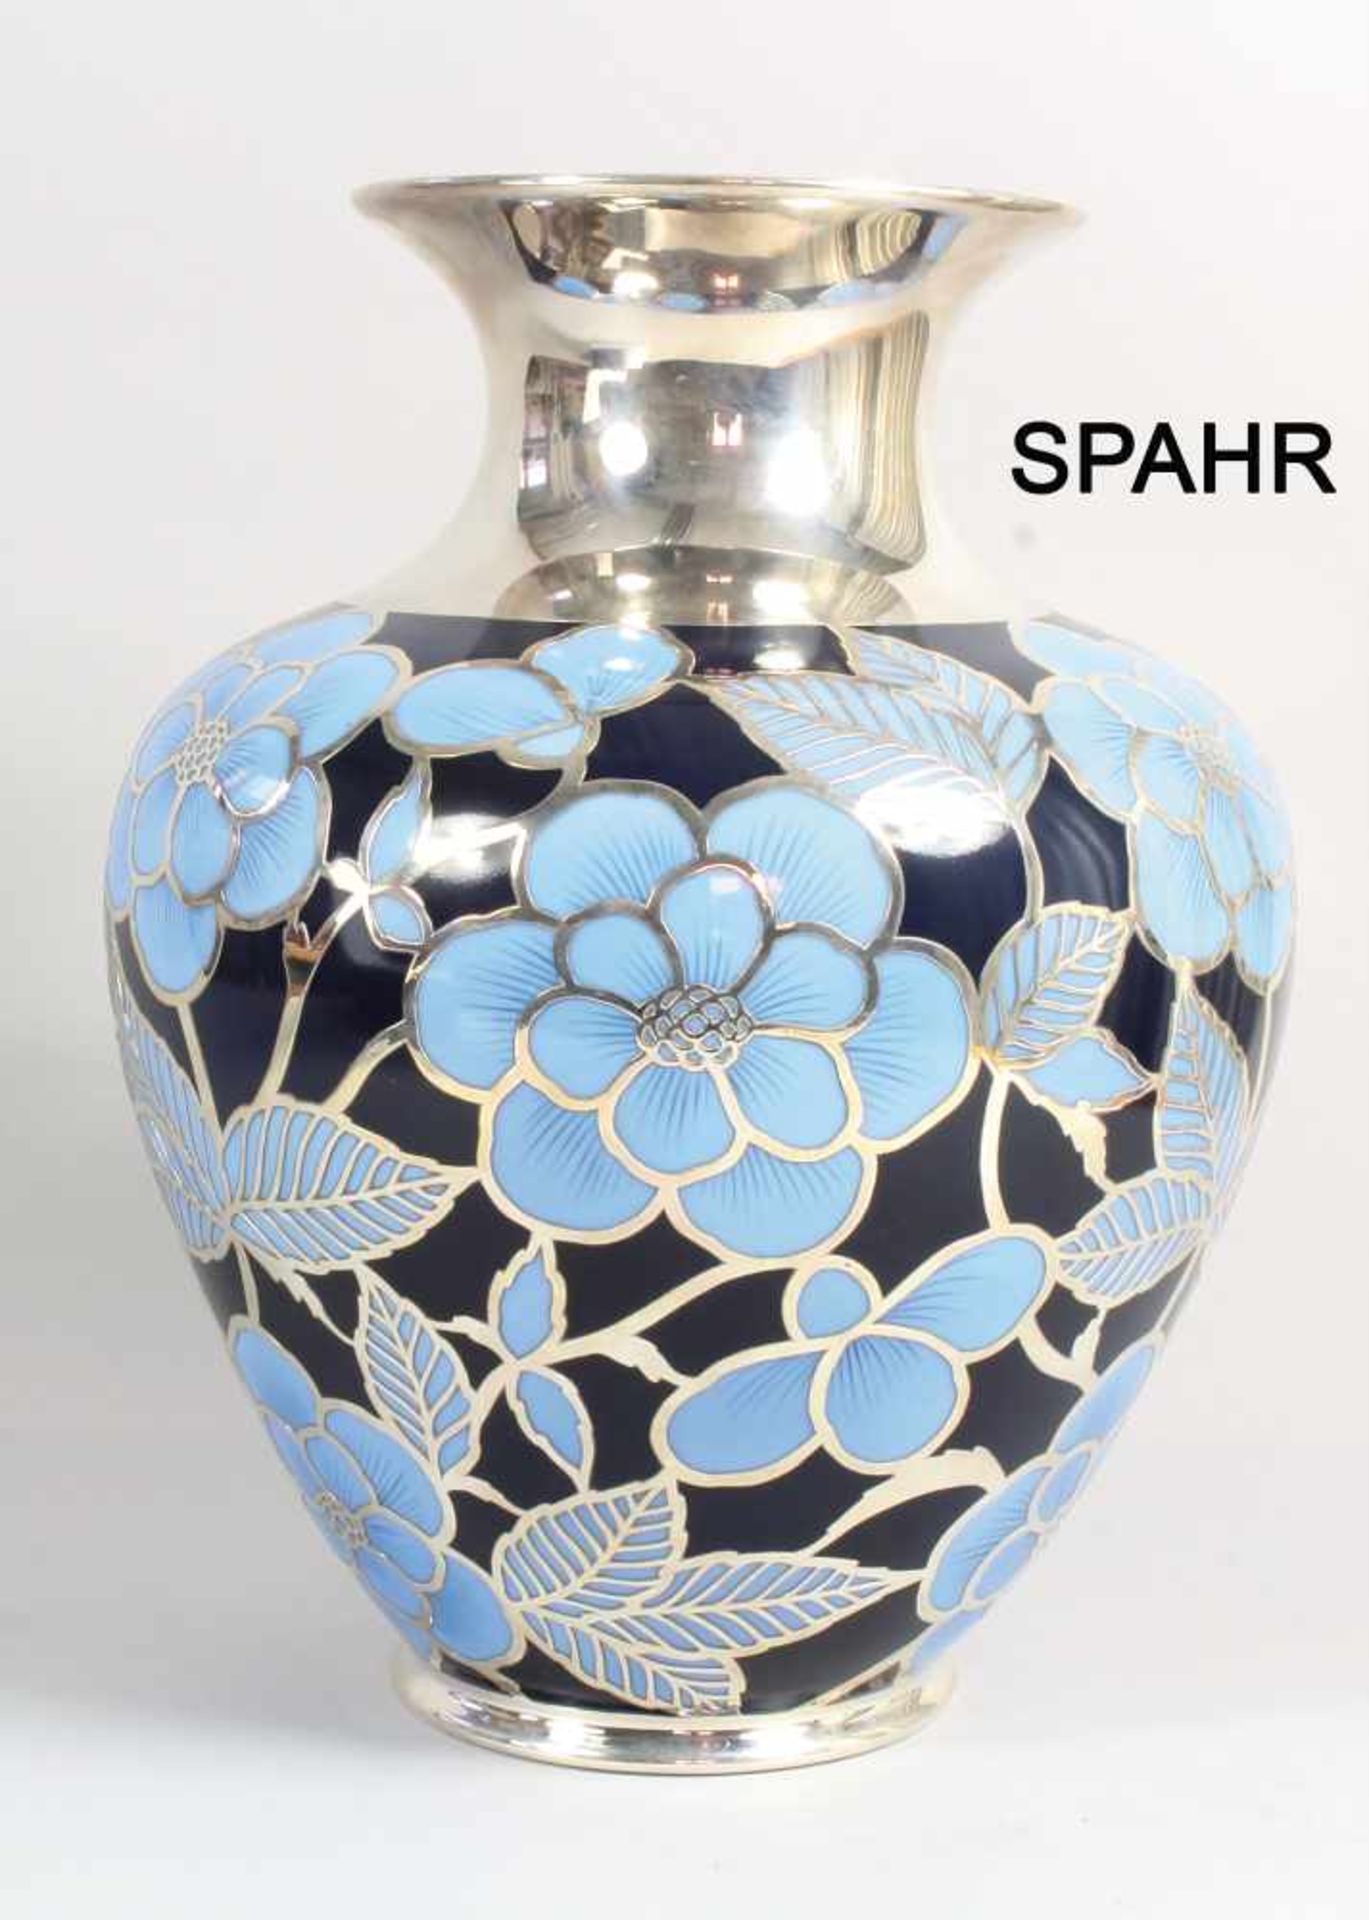 Große Vase, "ART-DECO" 1930/40er Jahre, 1000er Silber OVERLAY, sig. SPAHR 1000 10, Porzellan